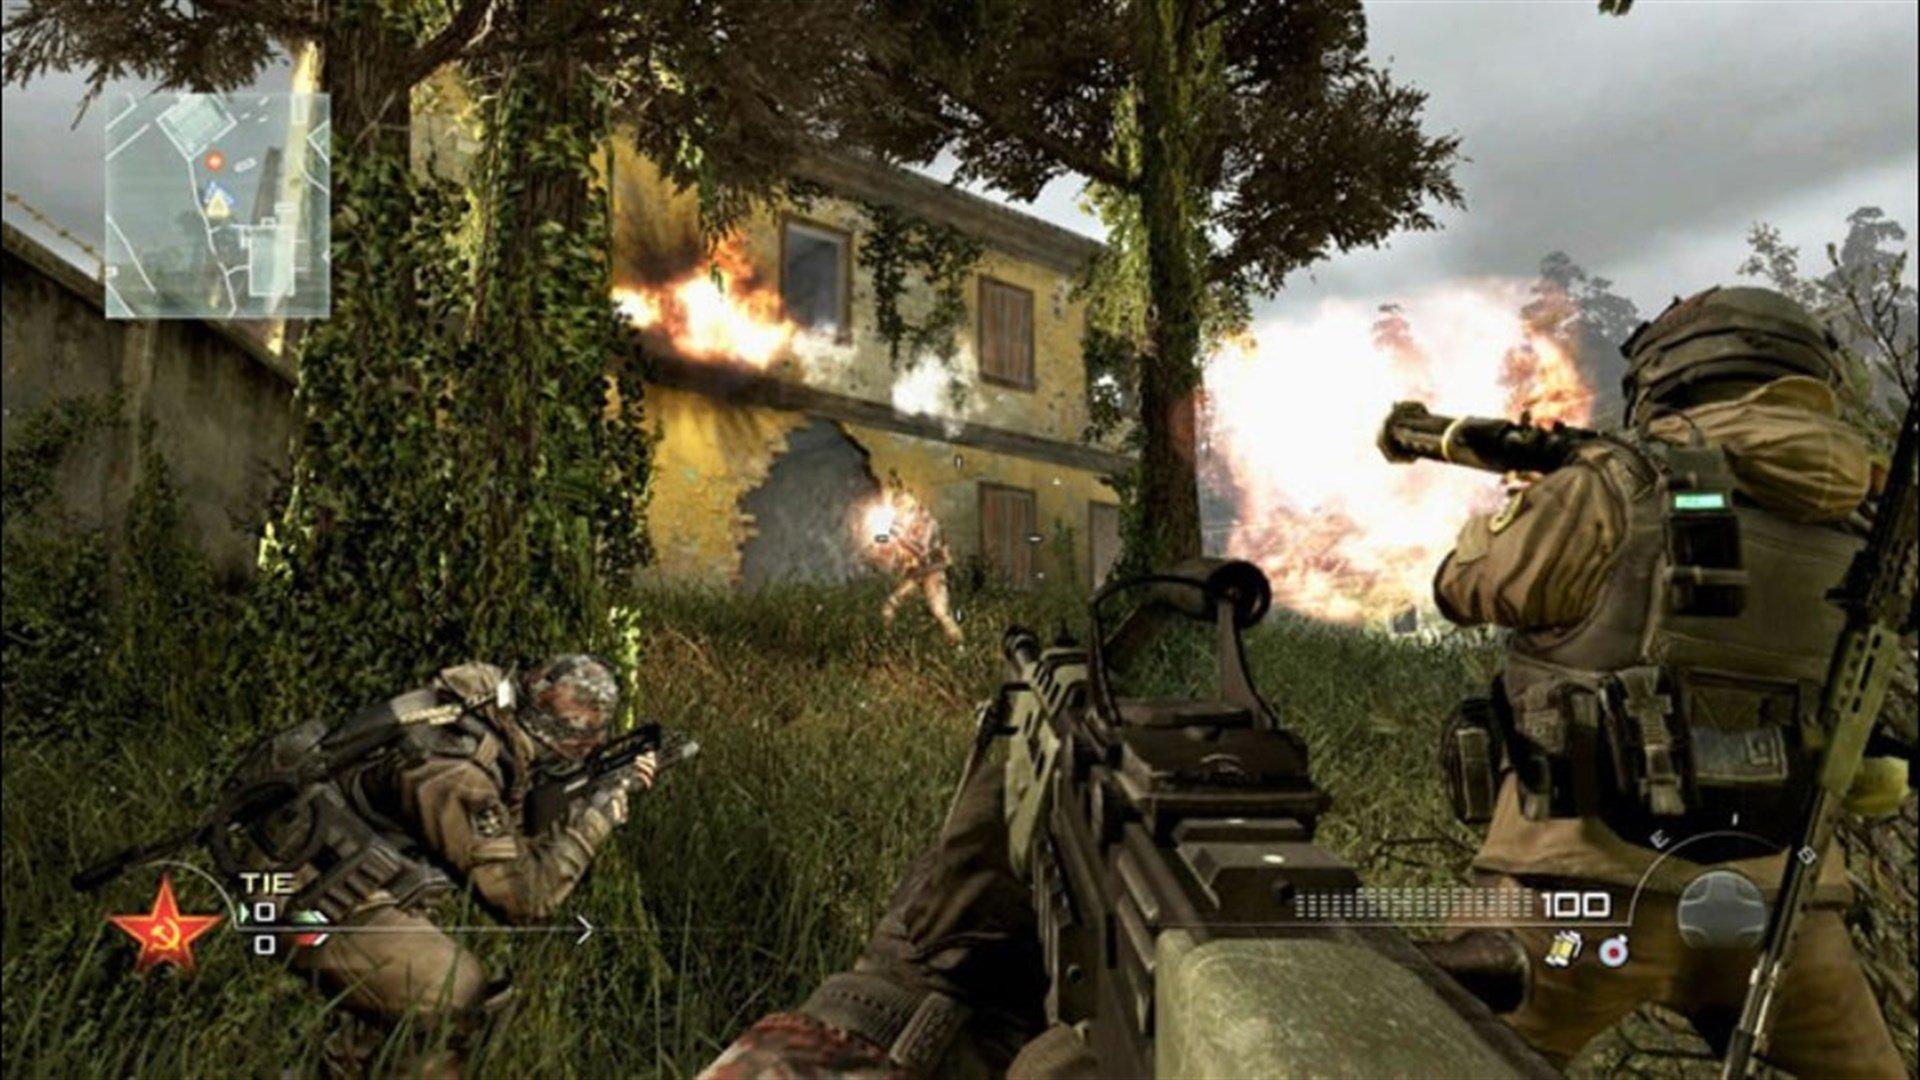 Call of Duty: Modern Warfare 2 - Xbox 360 | Xbox 360 | GameStop